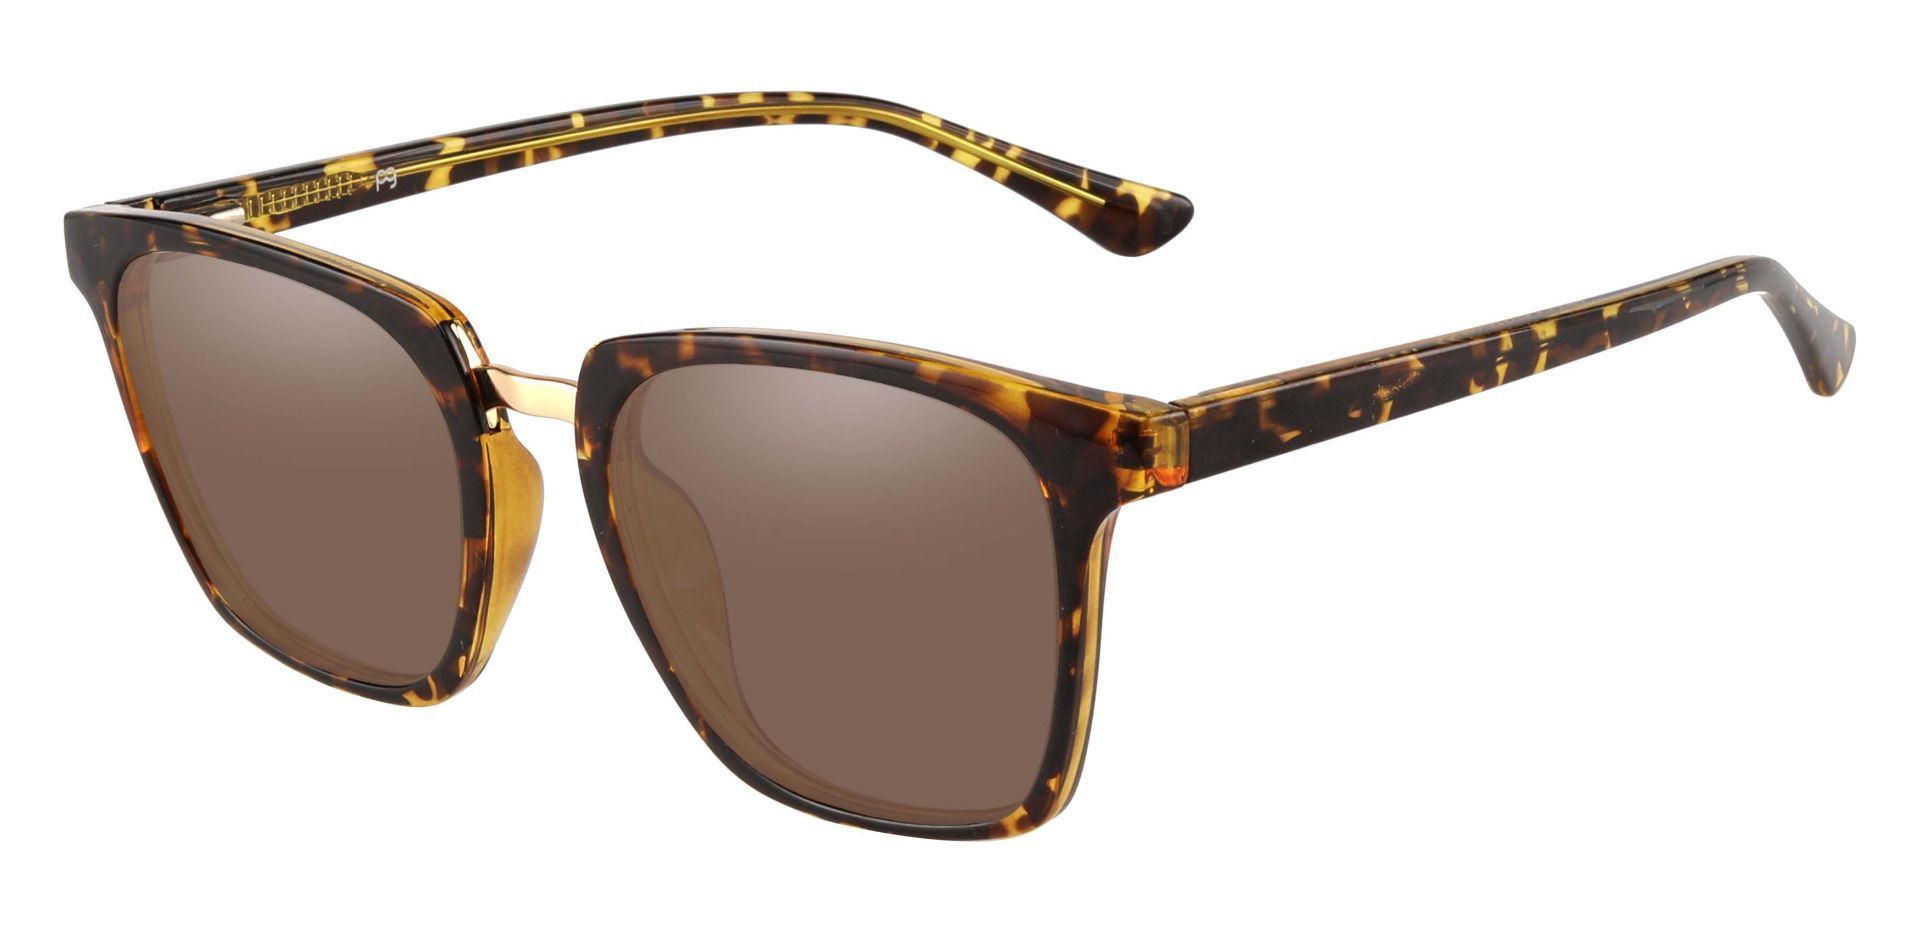 Delta Square Progressive Sunglasses - Tortoise Frame With Brown Lenses